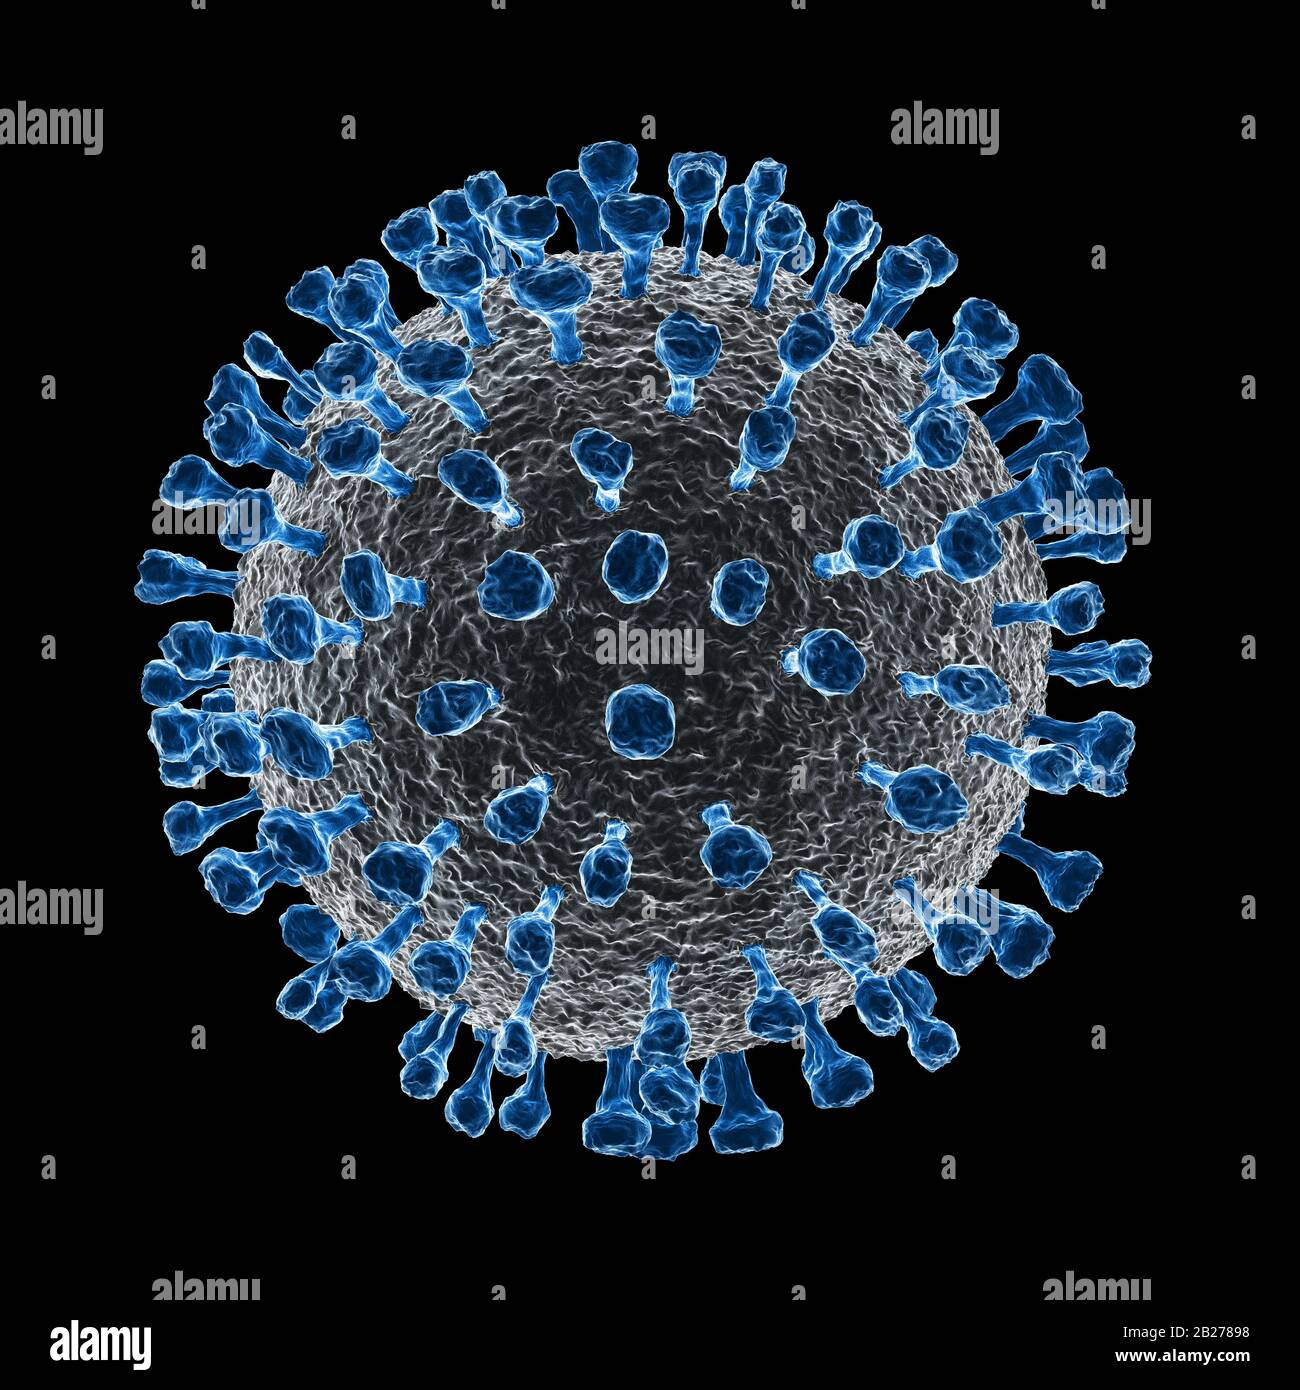 Virus isolated on black background. Blue color. 3d illustration. Stock Photo